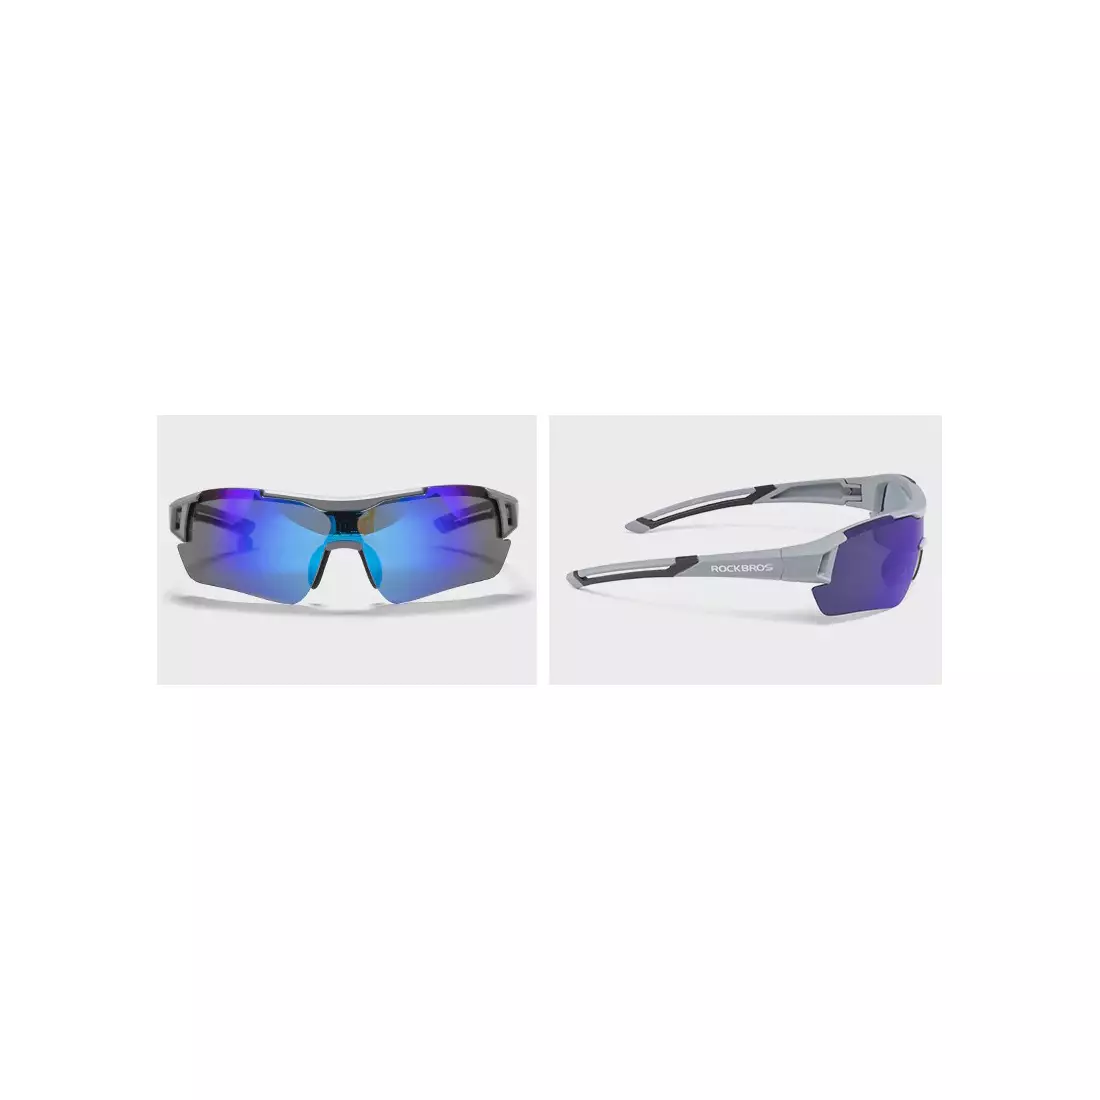 Rockbros 10117 bicycle sports glasses with polarized black-grey 